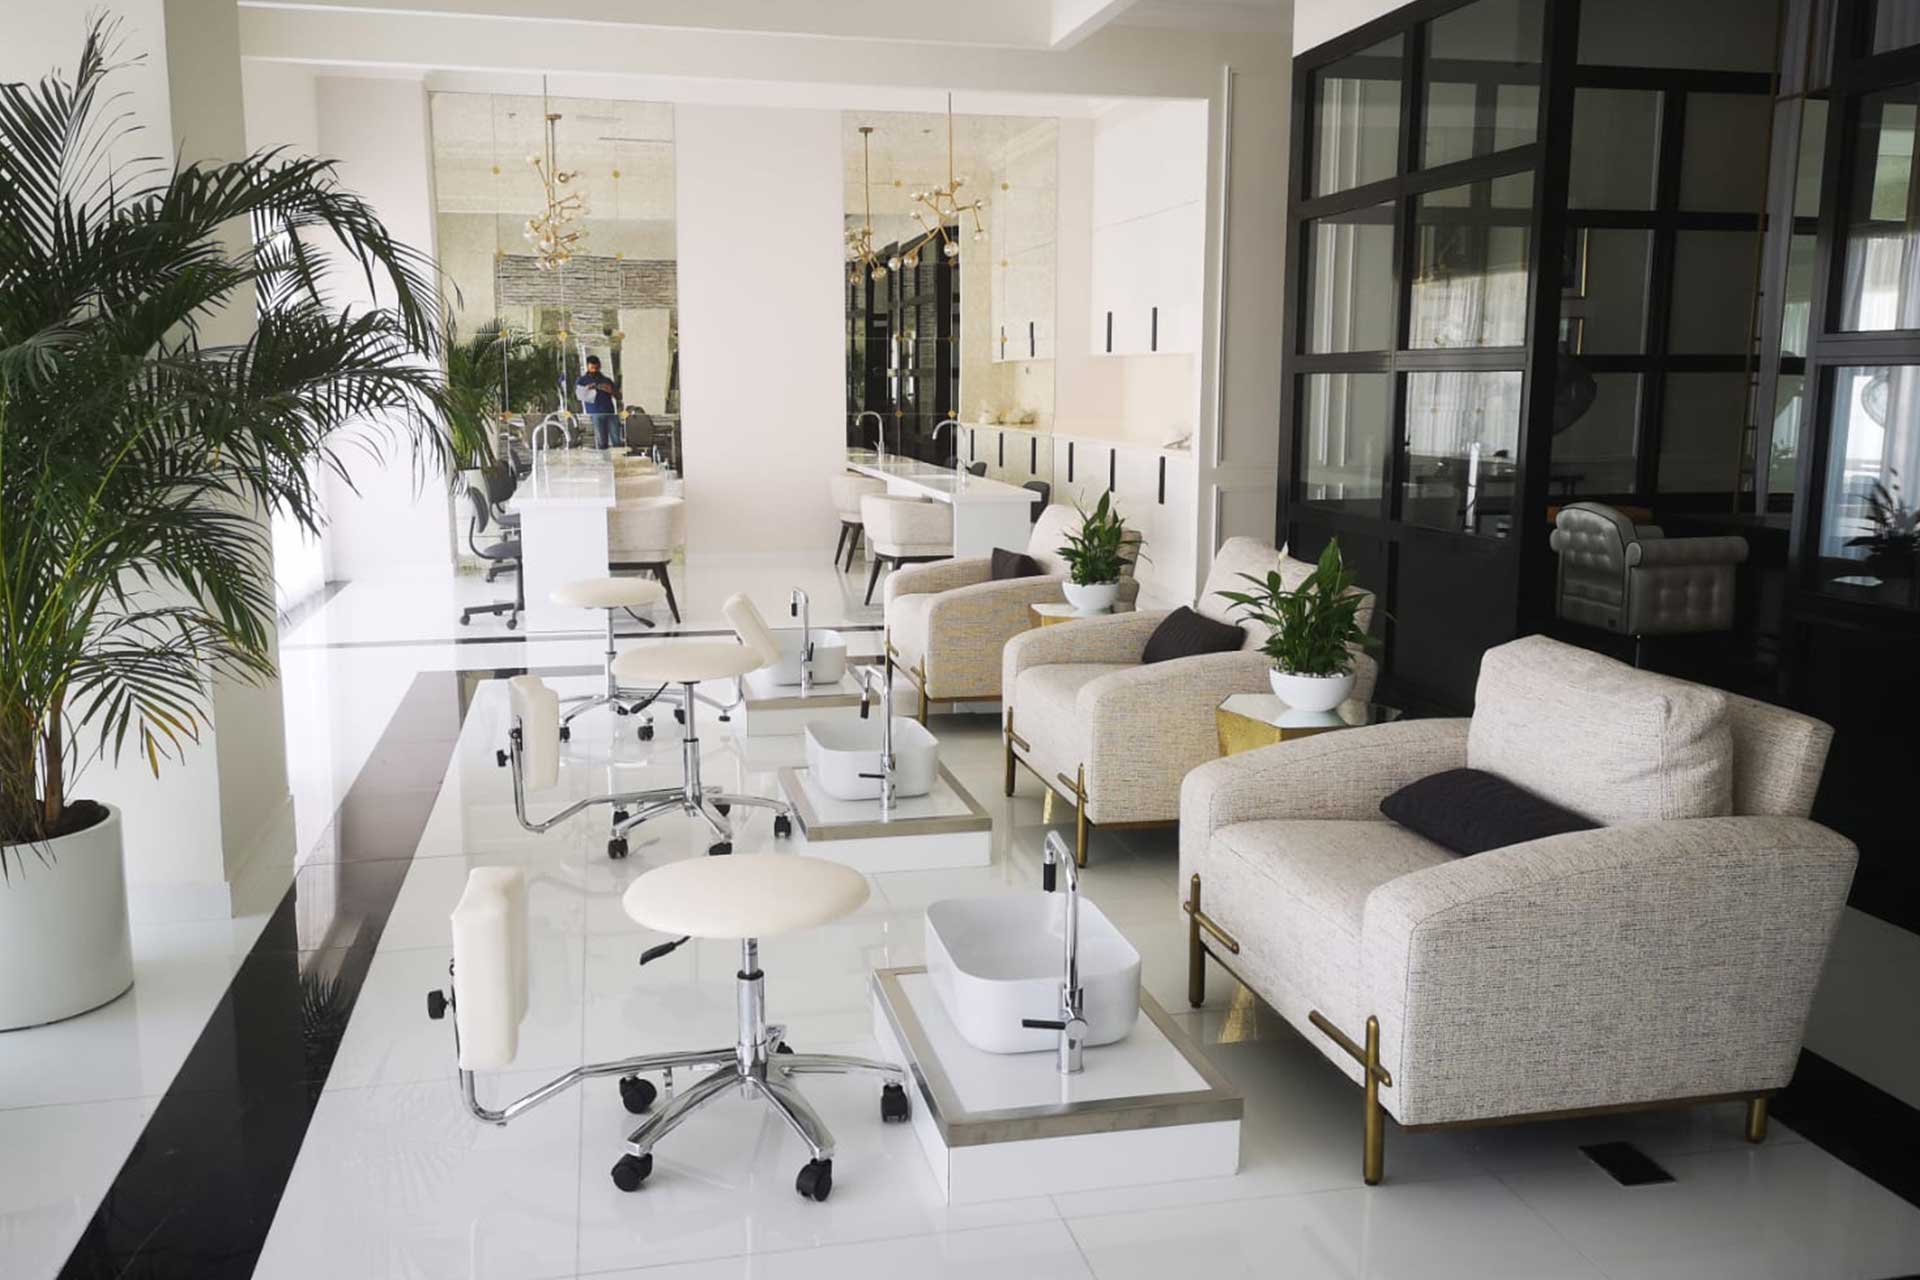 Interior of the luxury salon Maison 21 in Doha - image 3